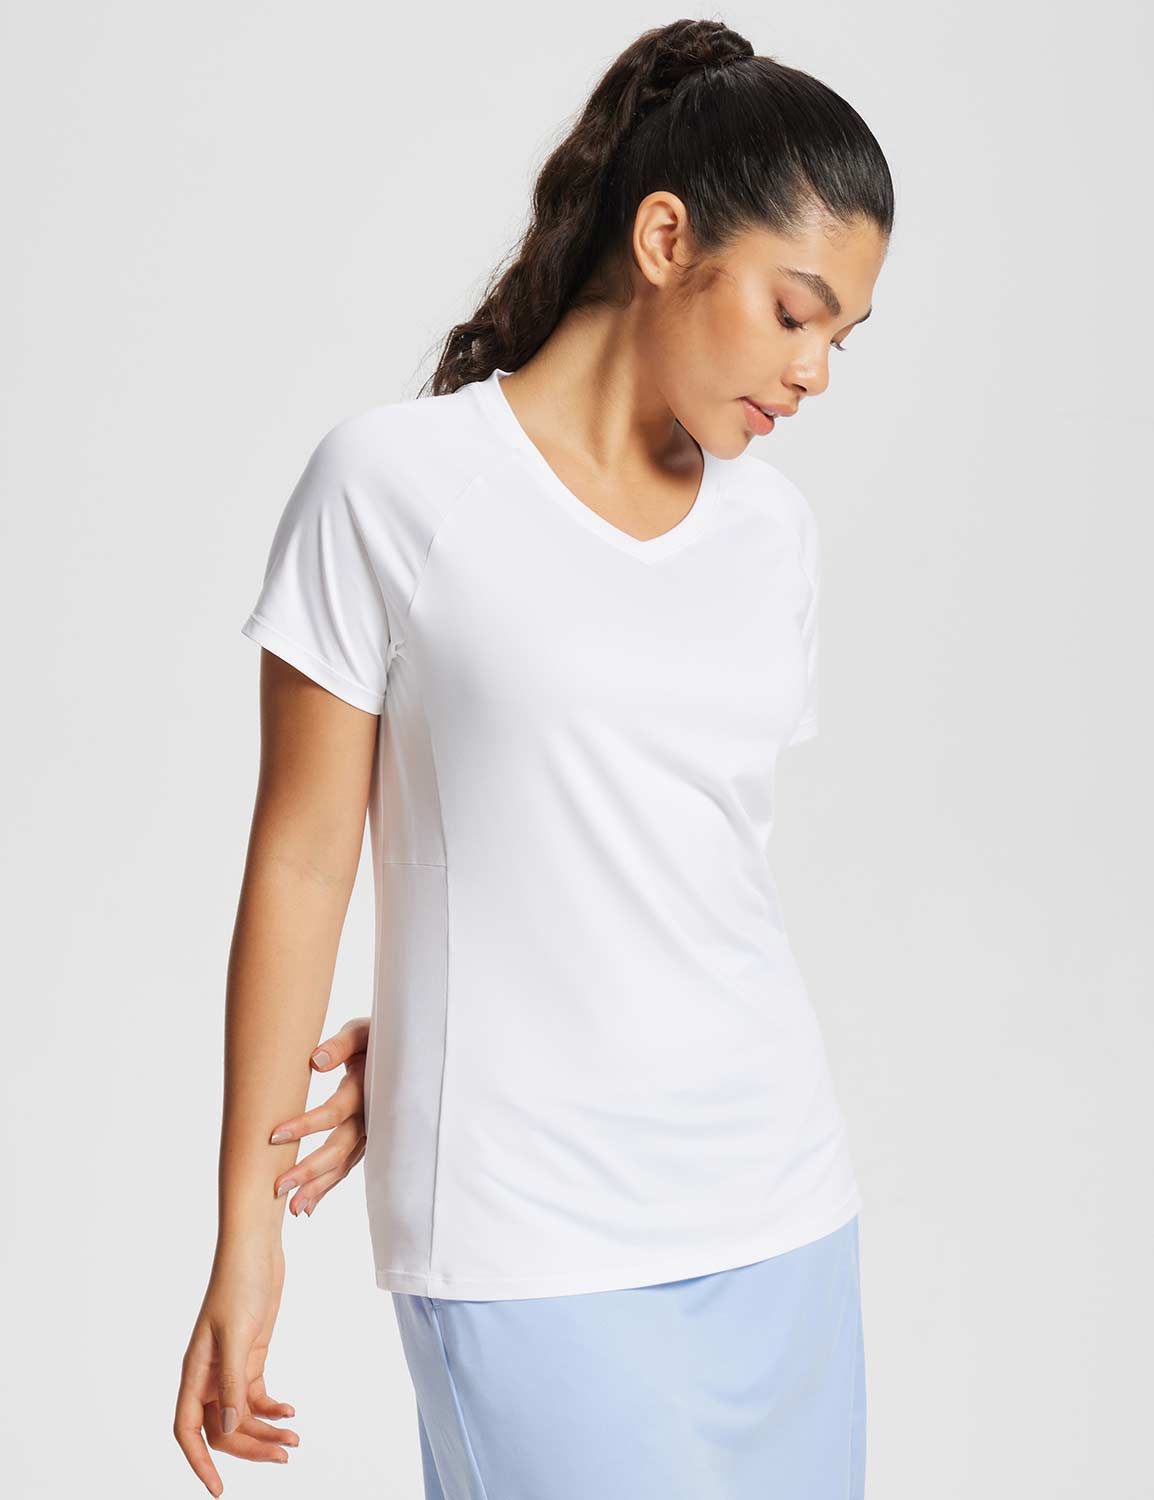 Baleaf Women's Summer Short Sleeve V Neck T-shirts Lucent White Side